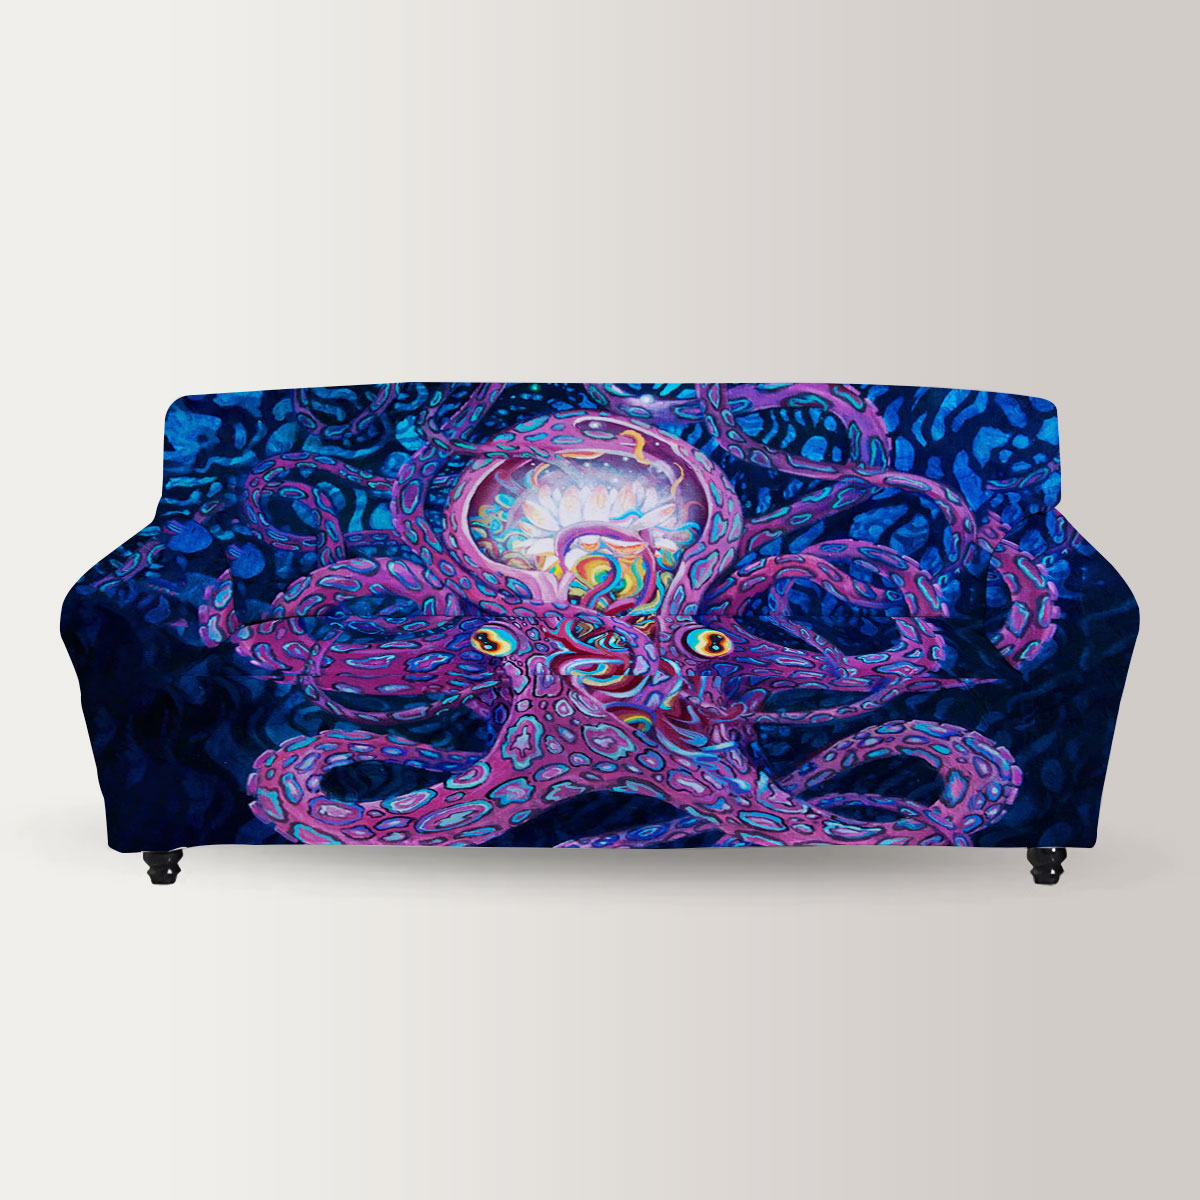 Hippie Octopus Sofa Cover_2_1